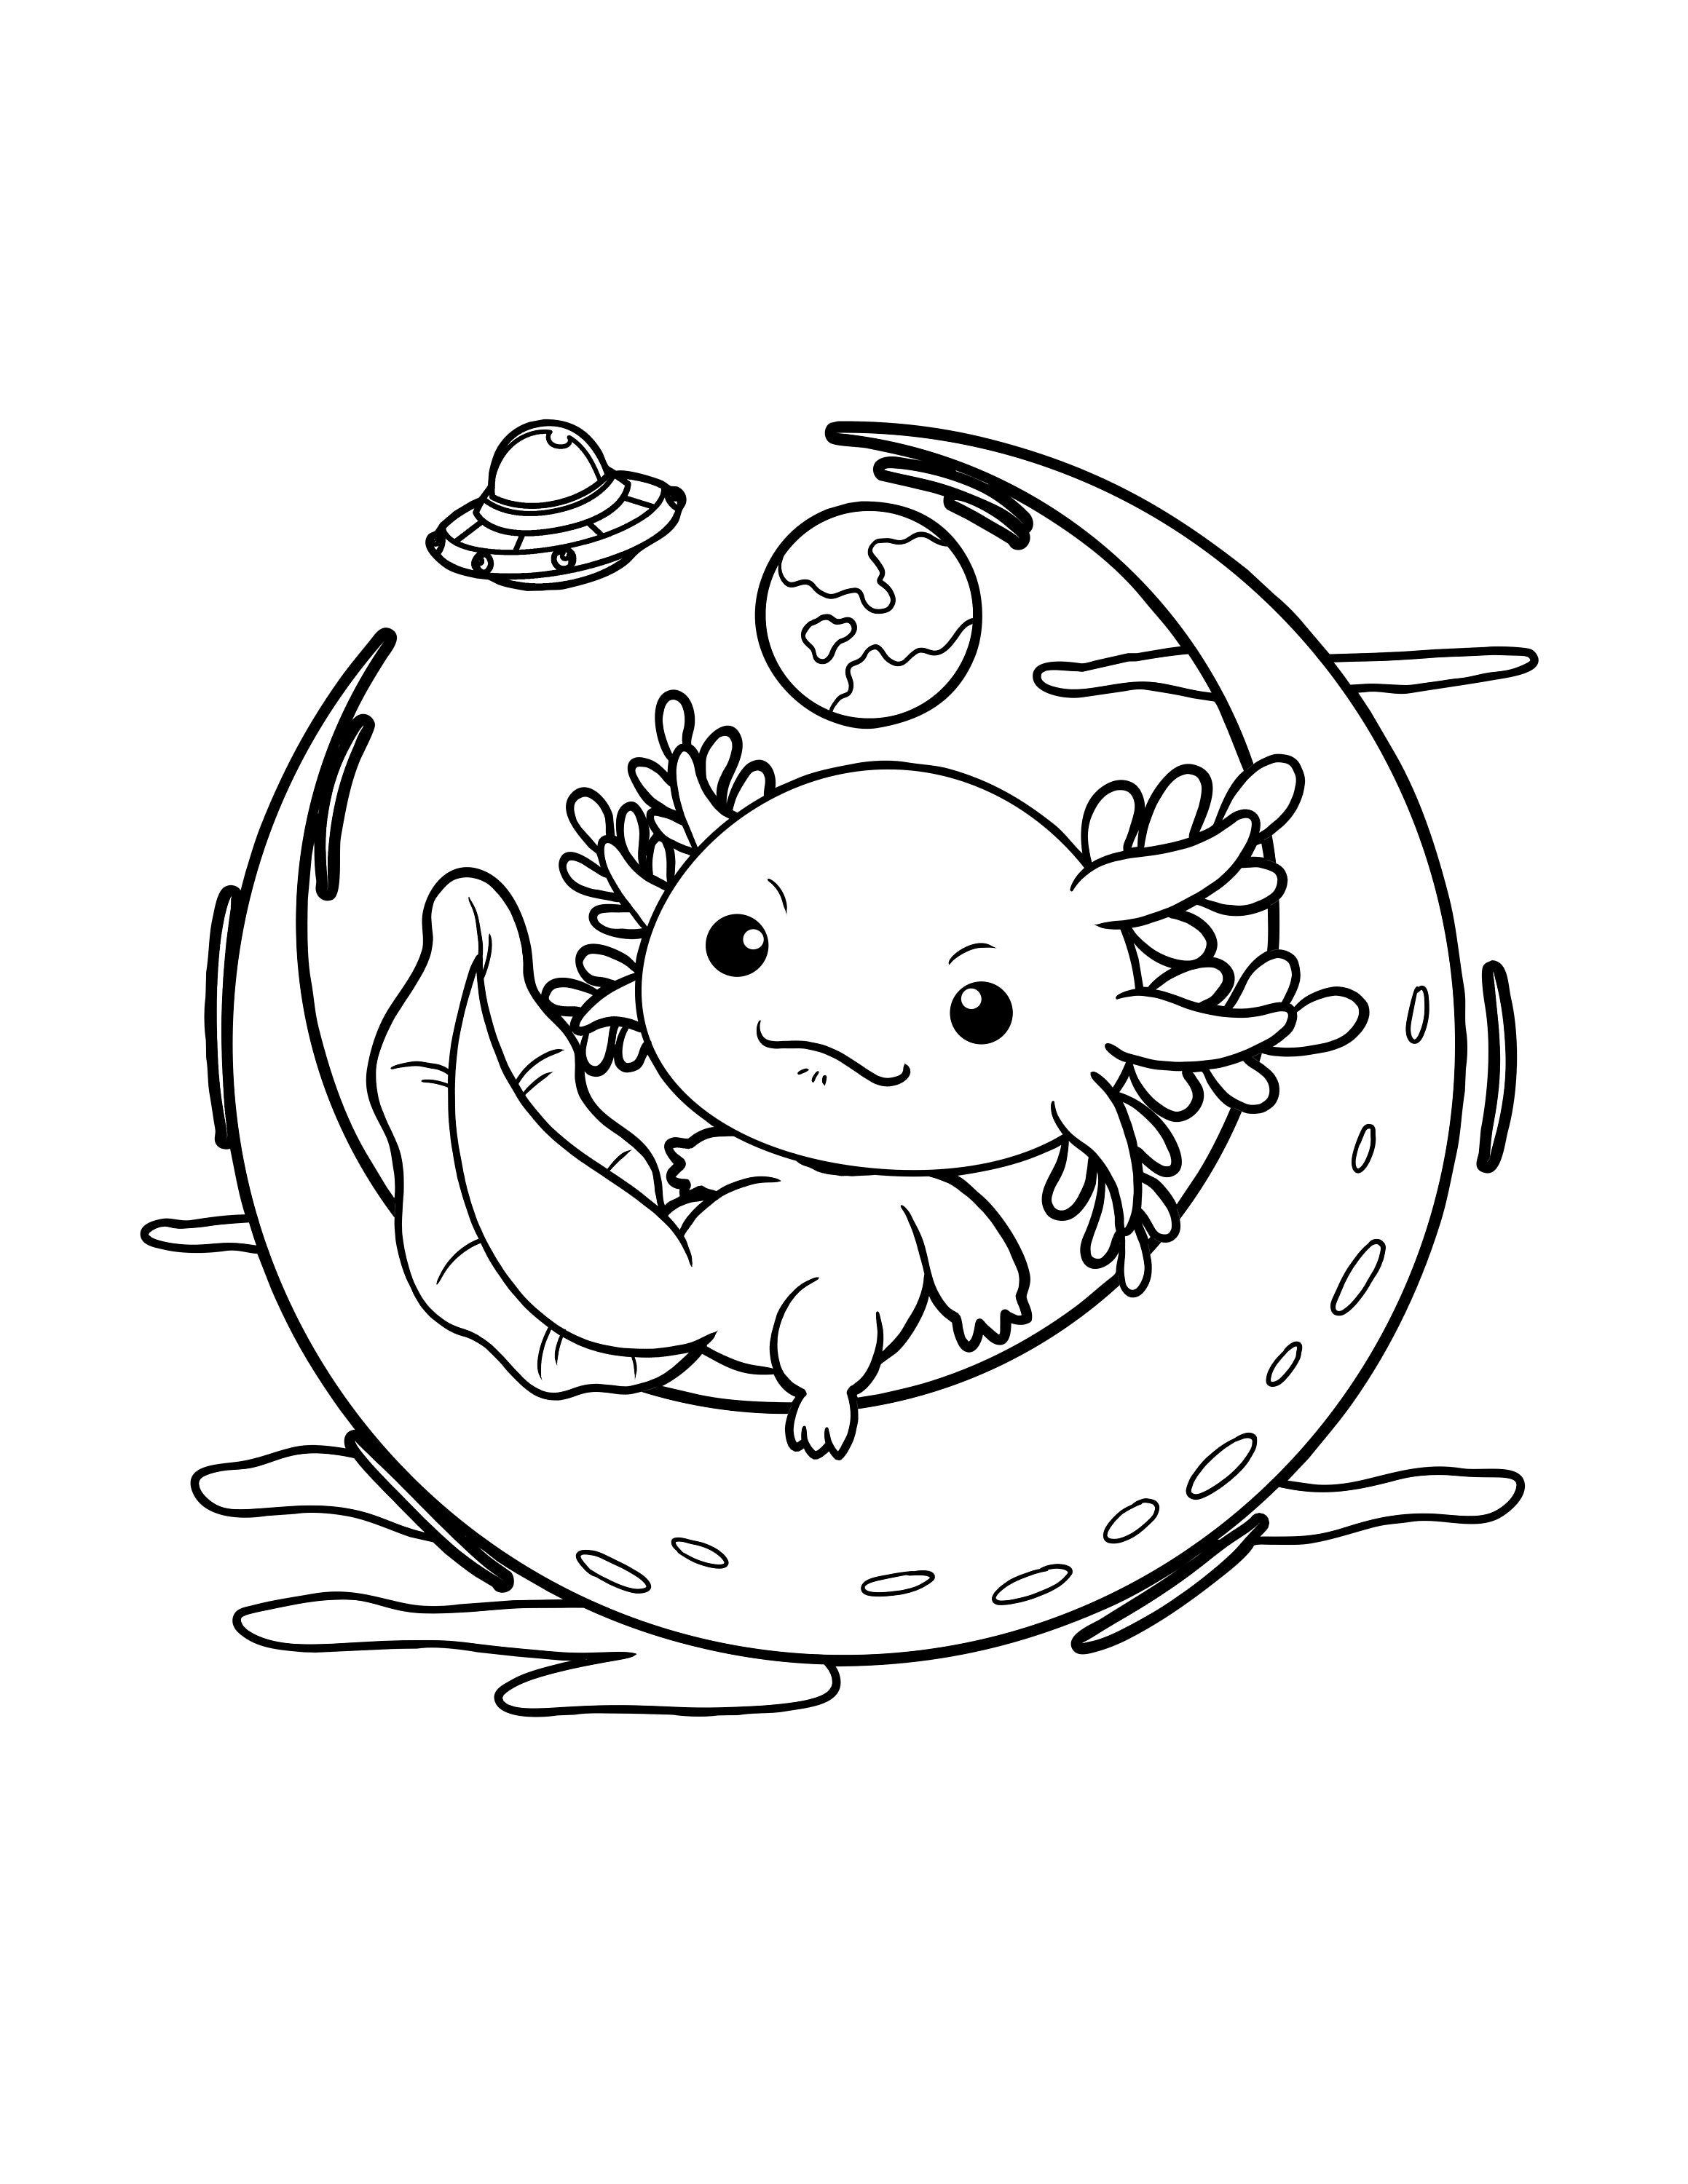 Axolotl Coloring Pages to Print - Cartoon Axolotl Coloring Pages